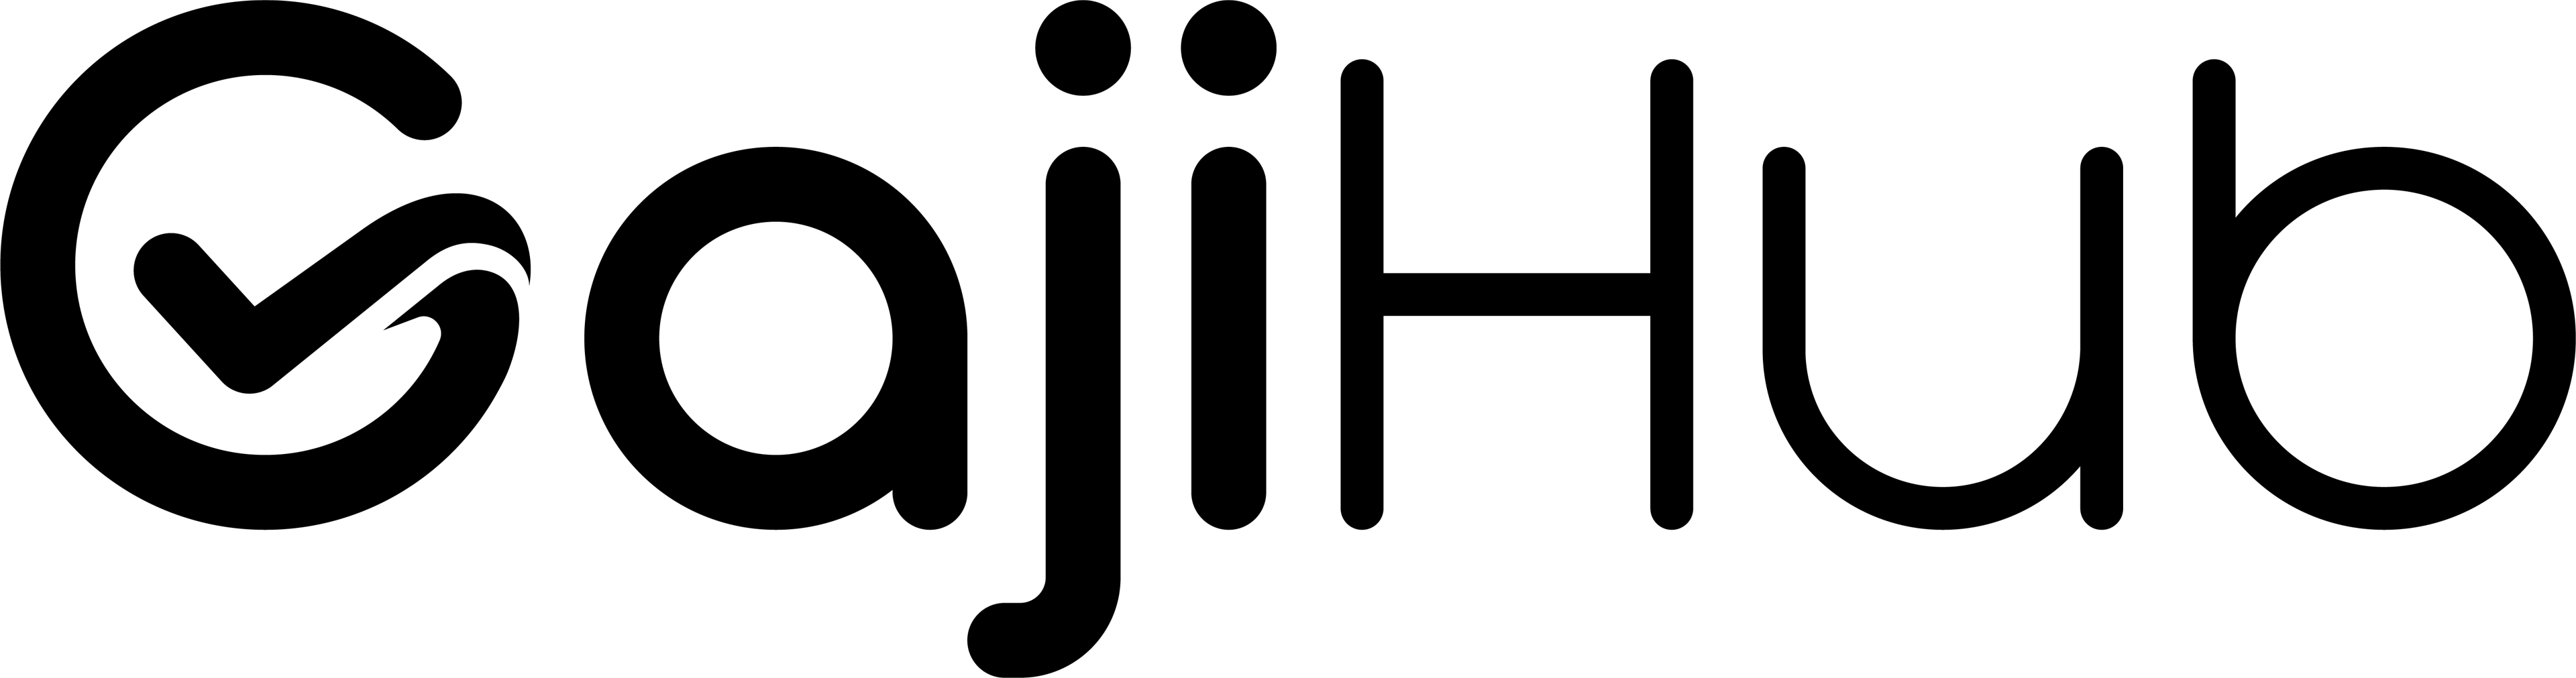 Logo gajihub gray